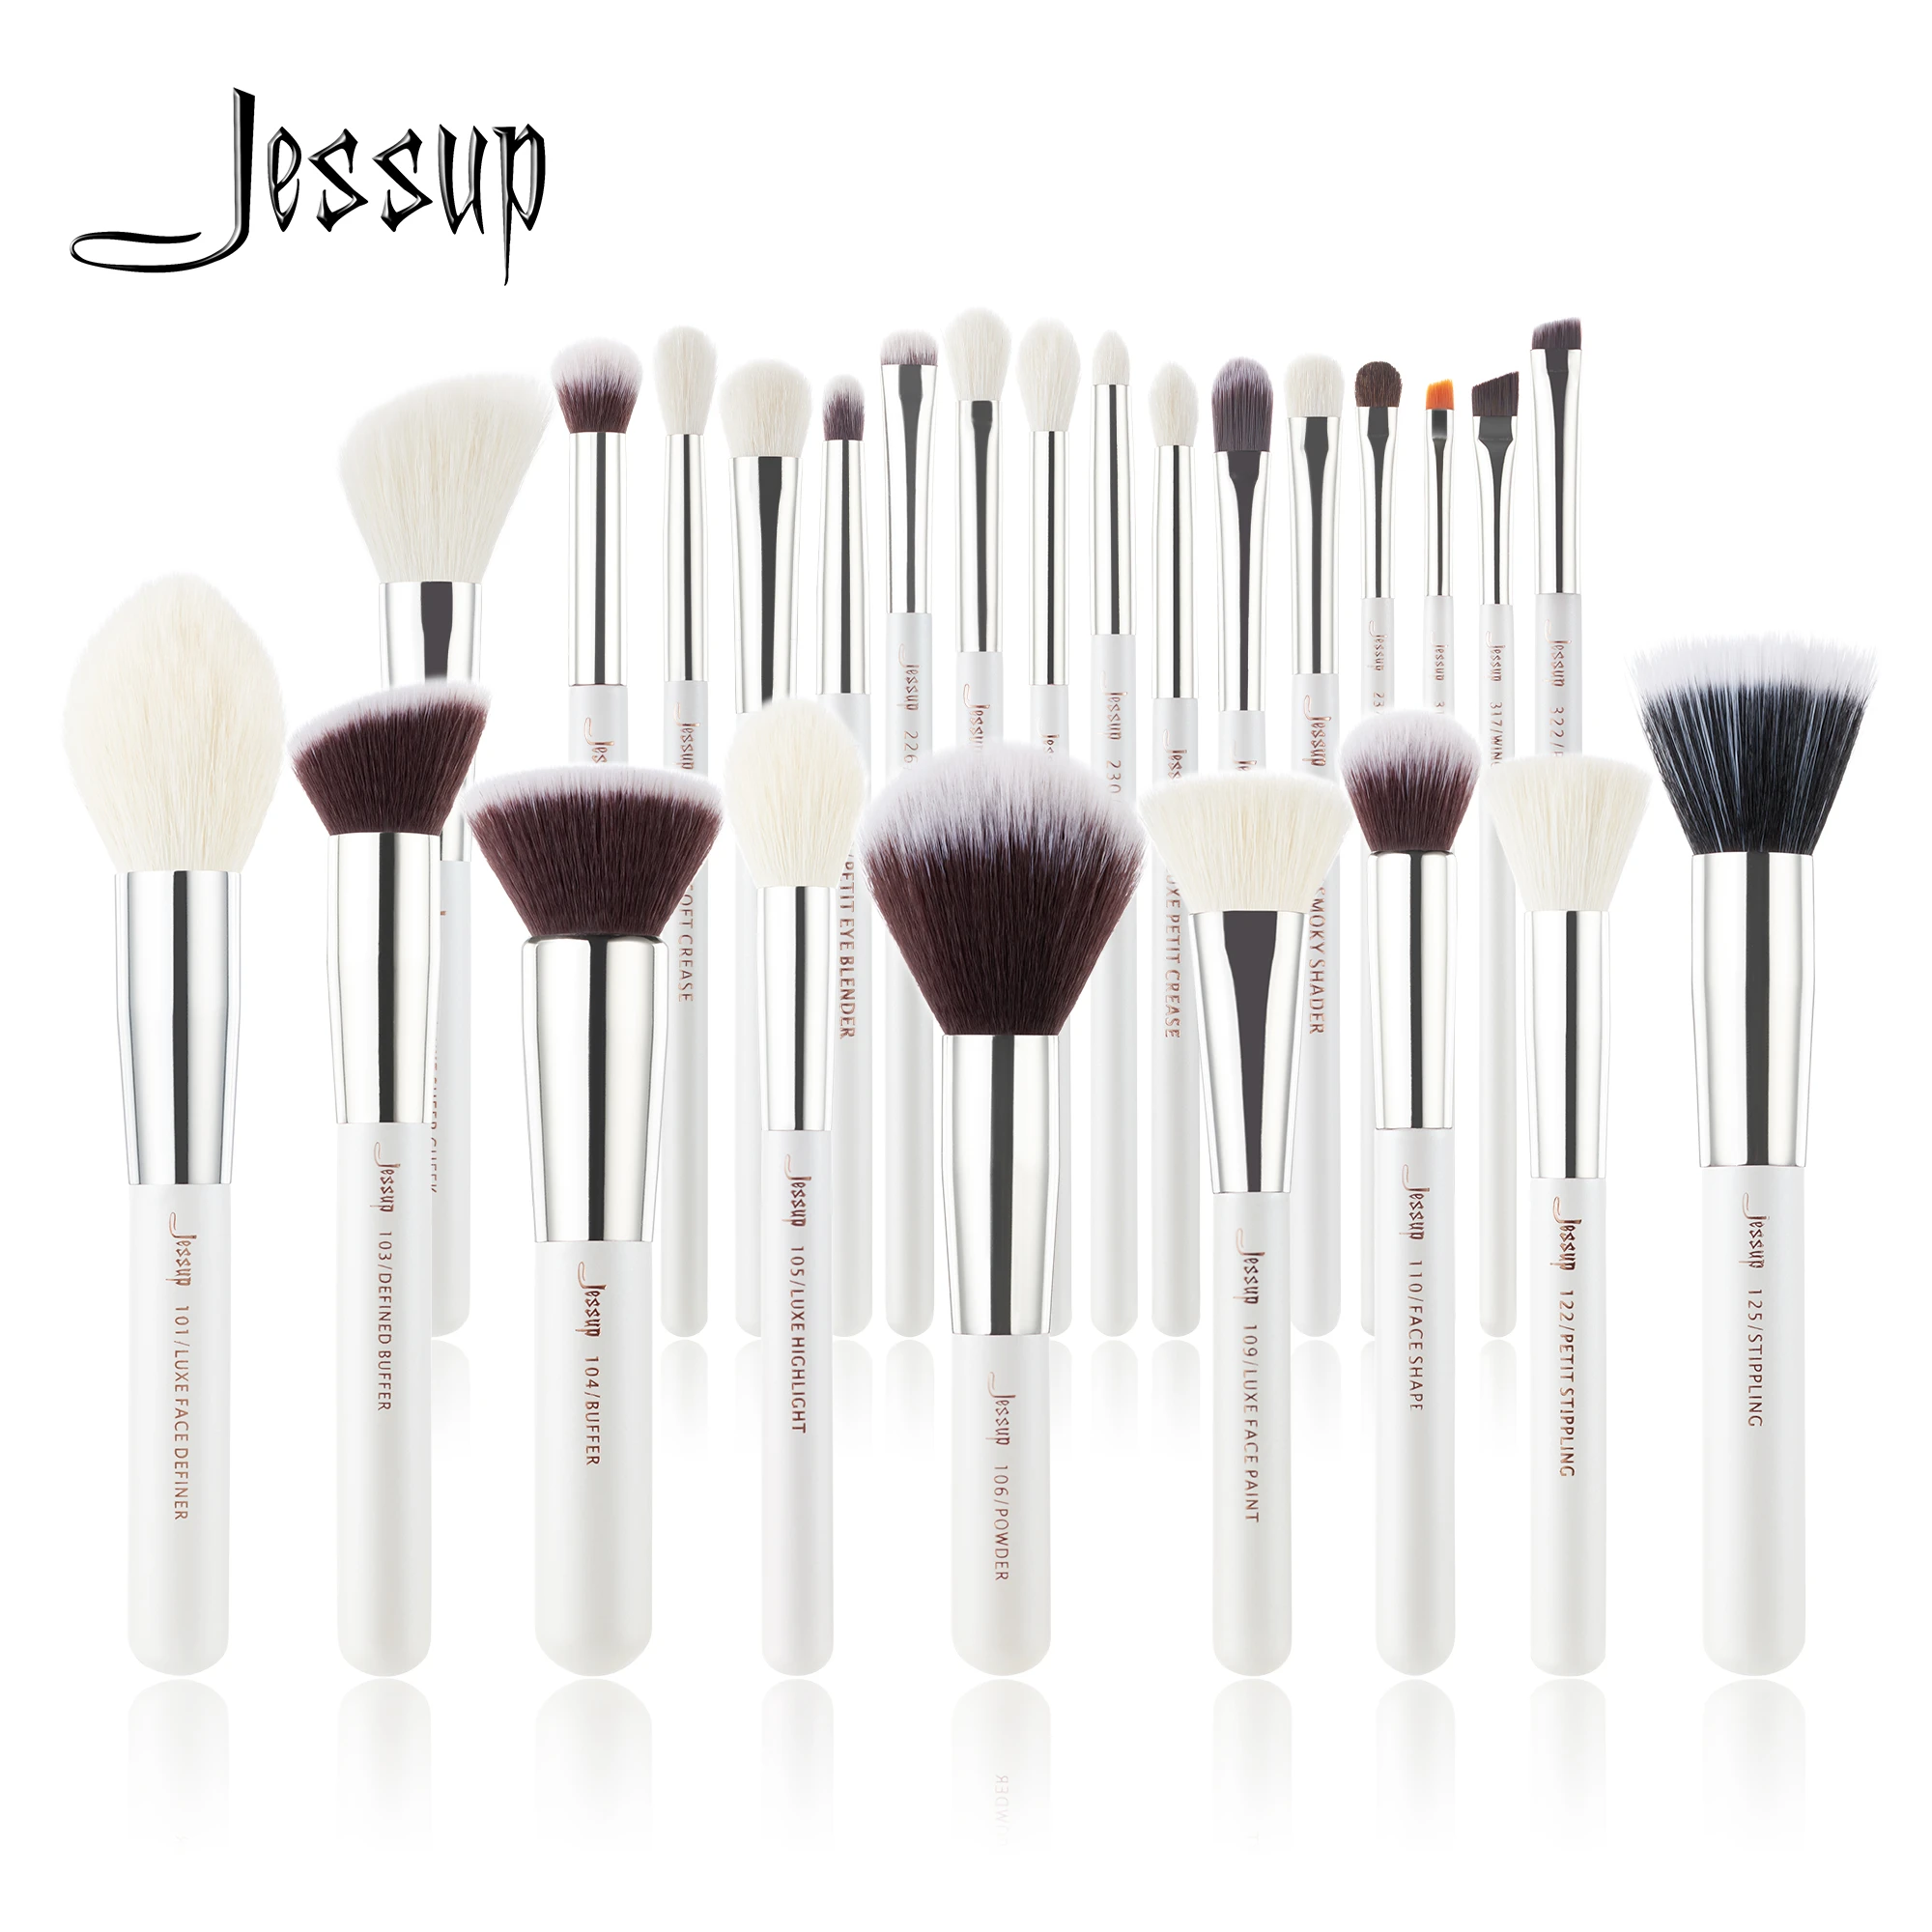 Jessup Pearl White/Silver Makeup brushes set Beauty Foundation Powder Eyeshadow Make up Brushes High quality 6pcs-25pcs